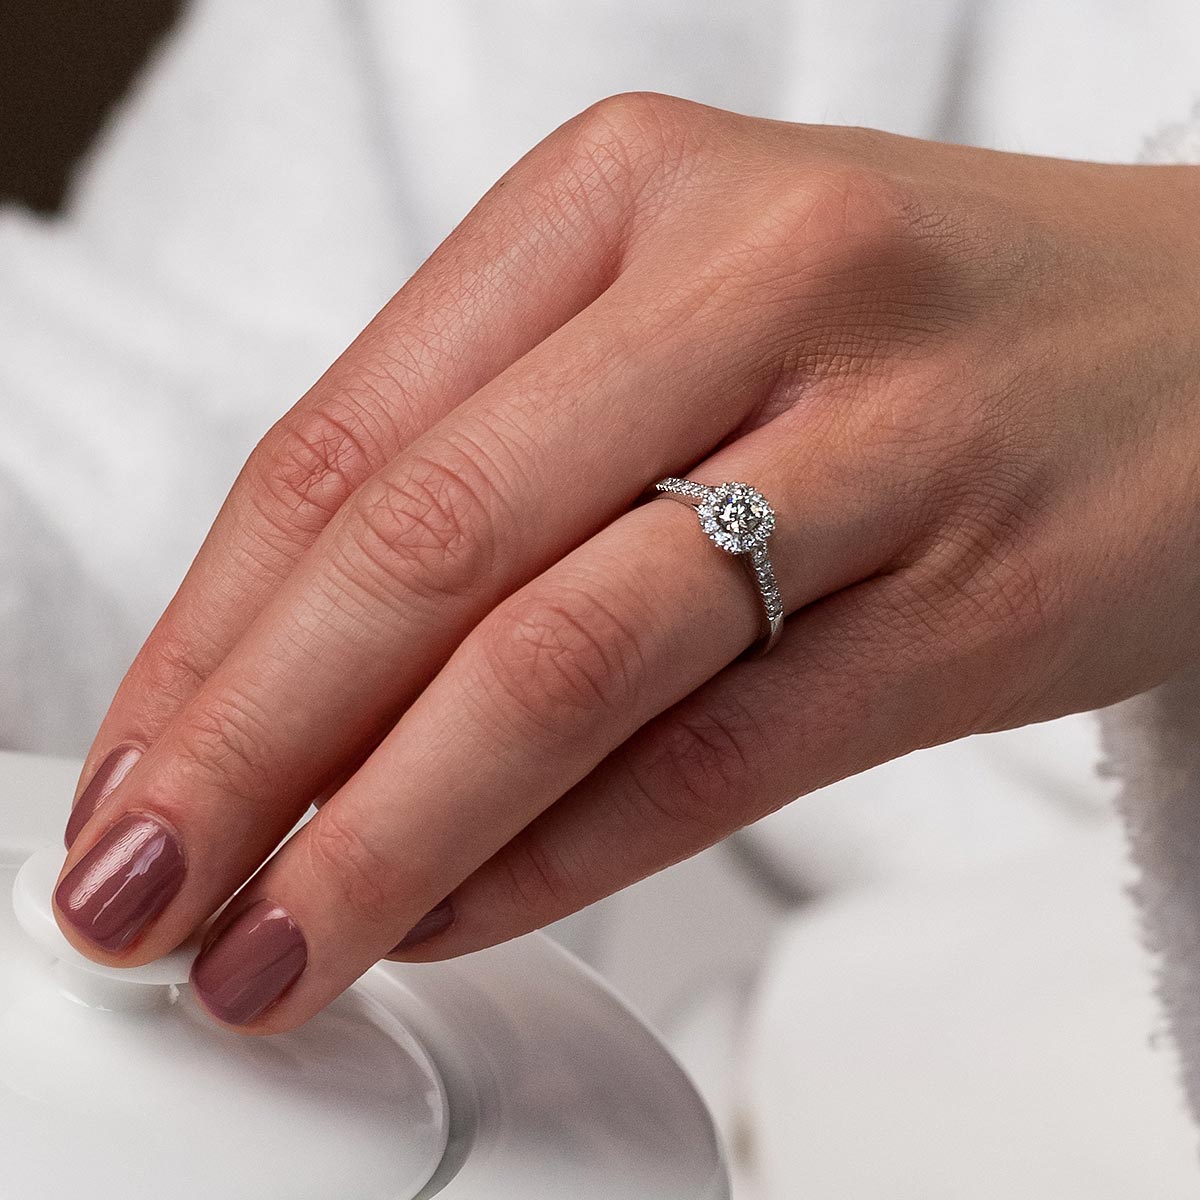 25 Carat Diamond Ring - Emerald Cut - D Flawless